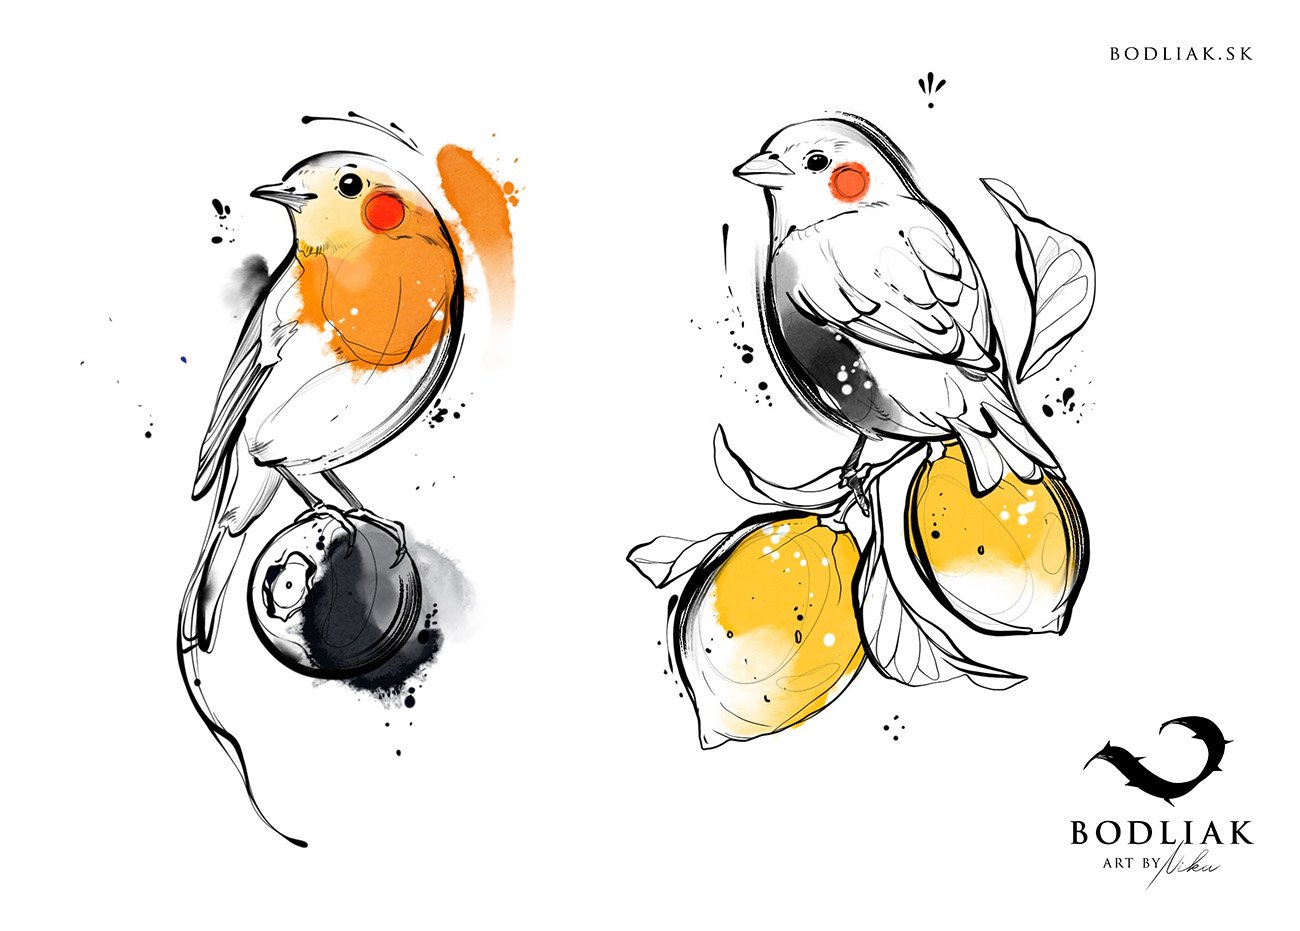  bodliak-bodliaktattoo-motiv-design-freedesign-original-nika-tetovanie-tattoo-colour-colourtattoo-birds-vtaky-lemon-citrom-watercolour-abstract 